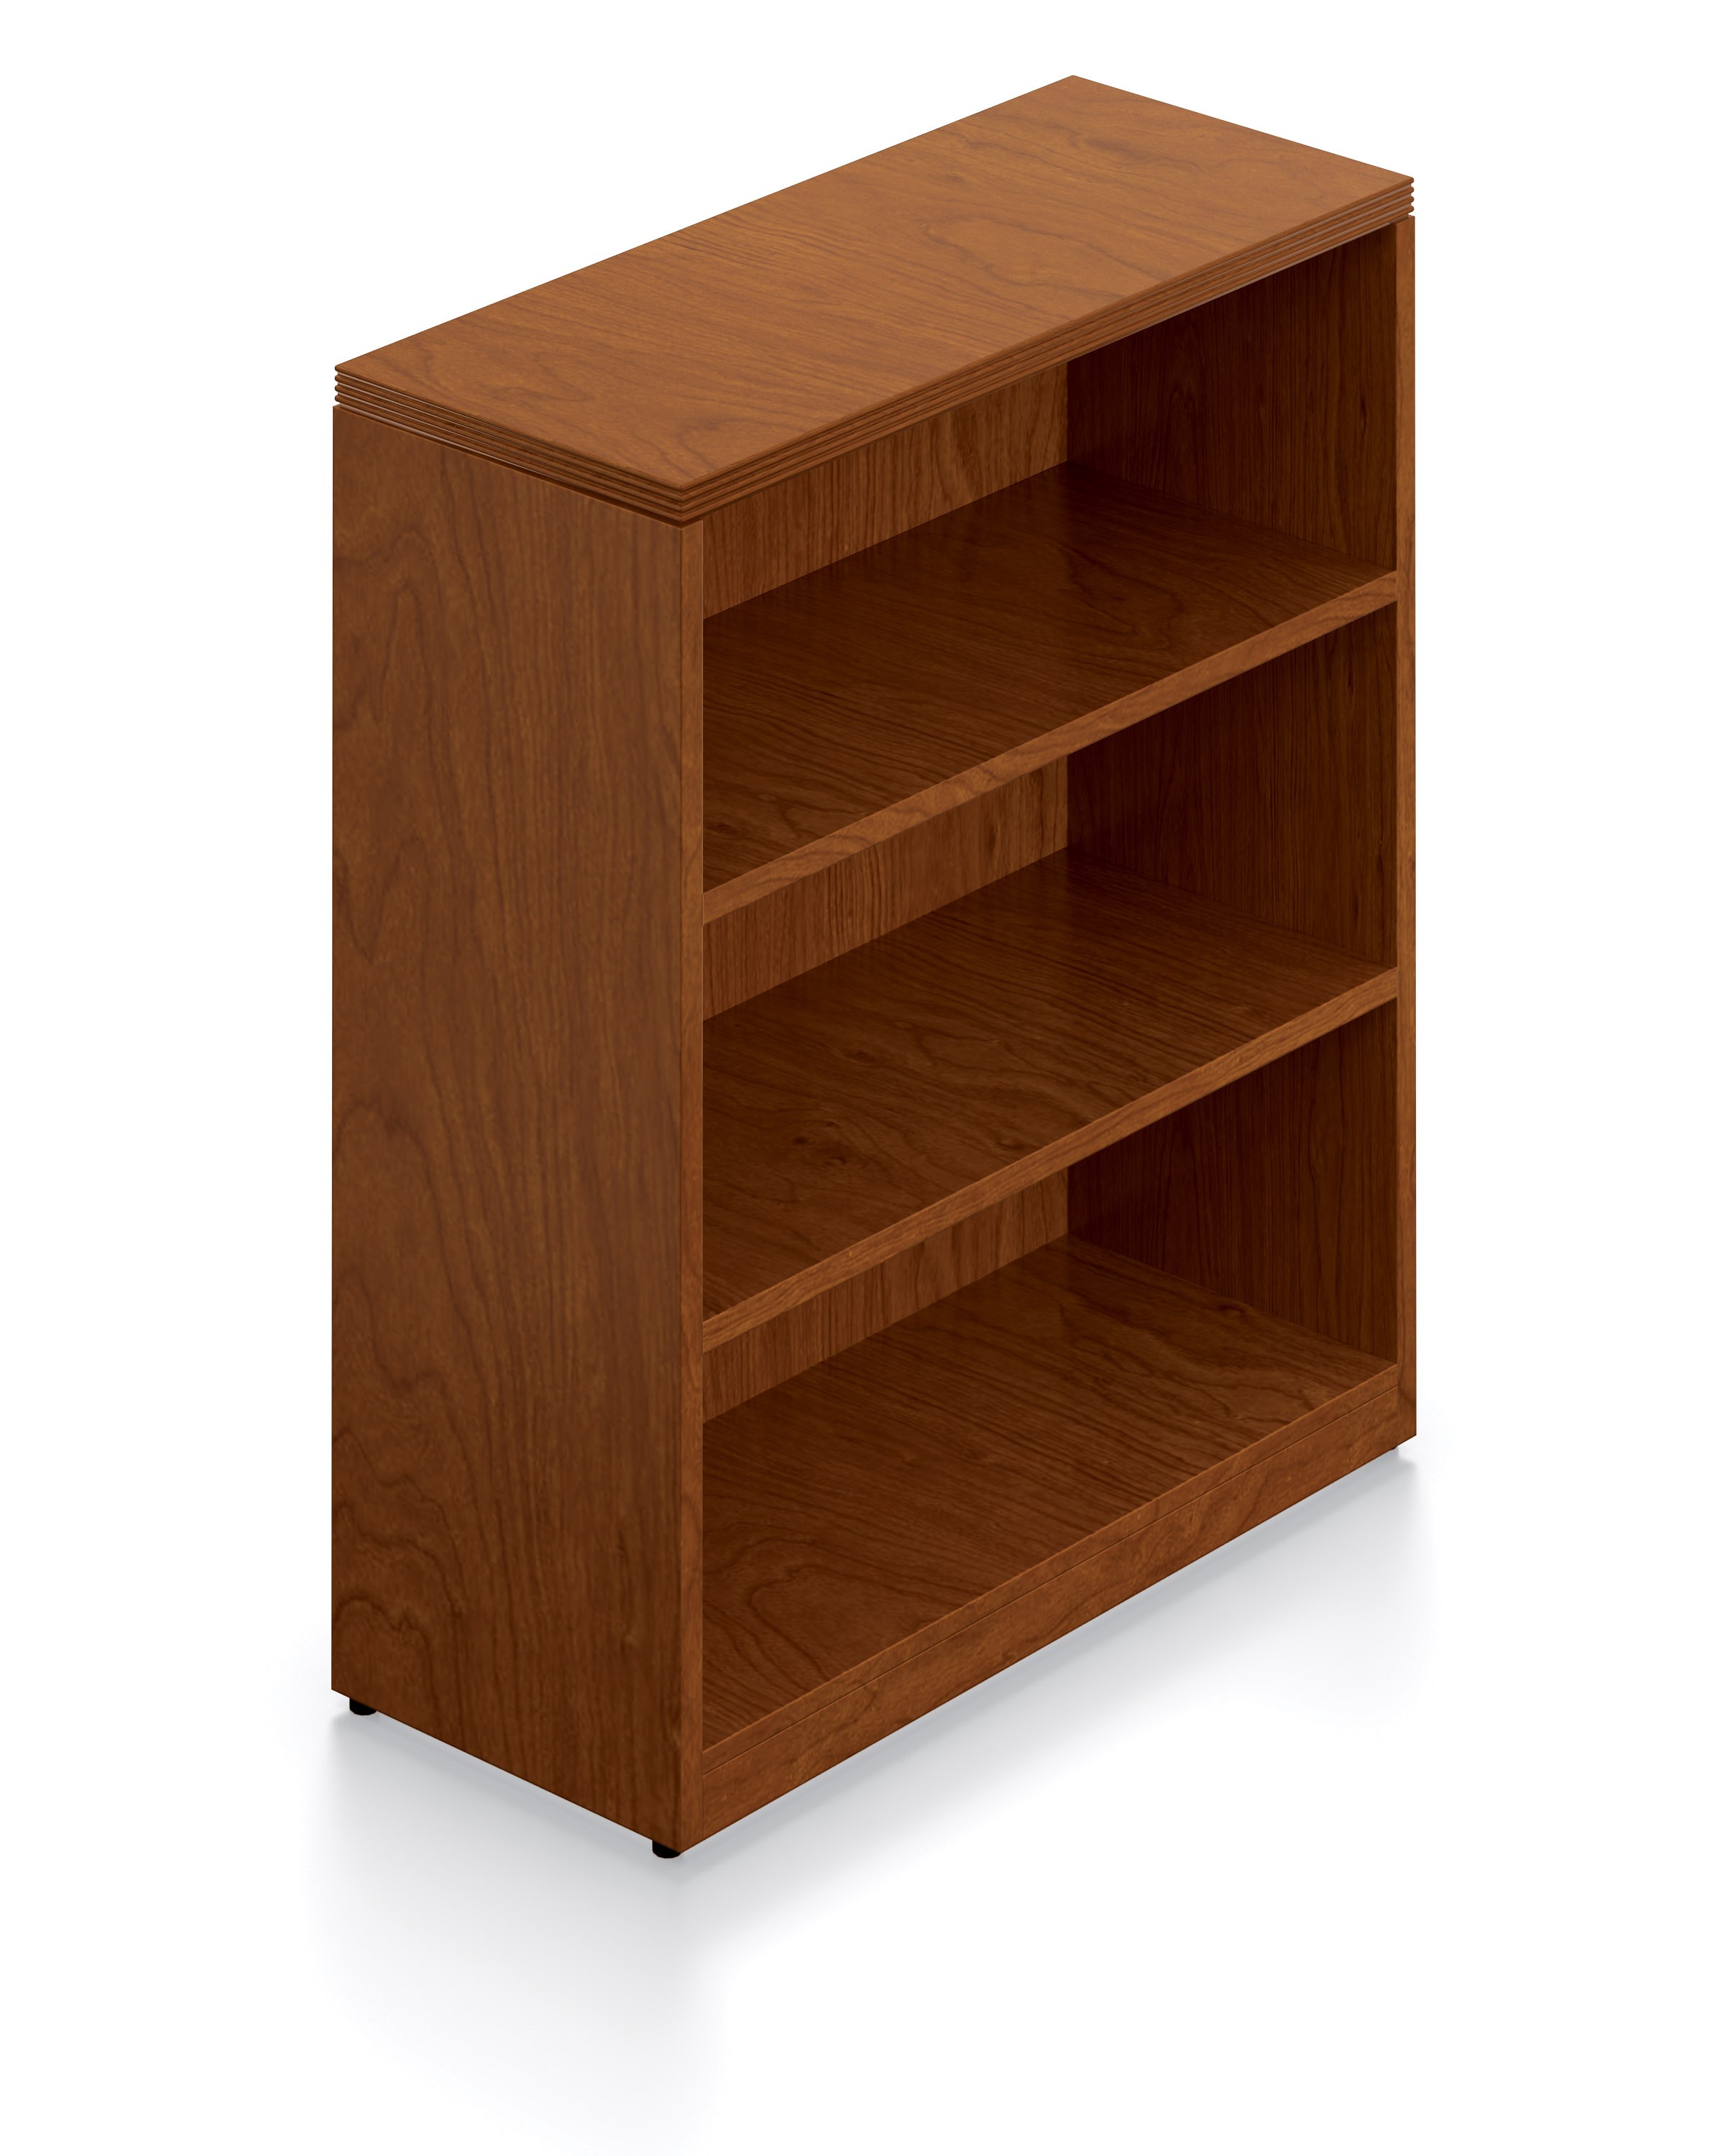 Ventnor Wood Veneer 42" 3 Shelf Bookcase